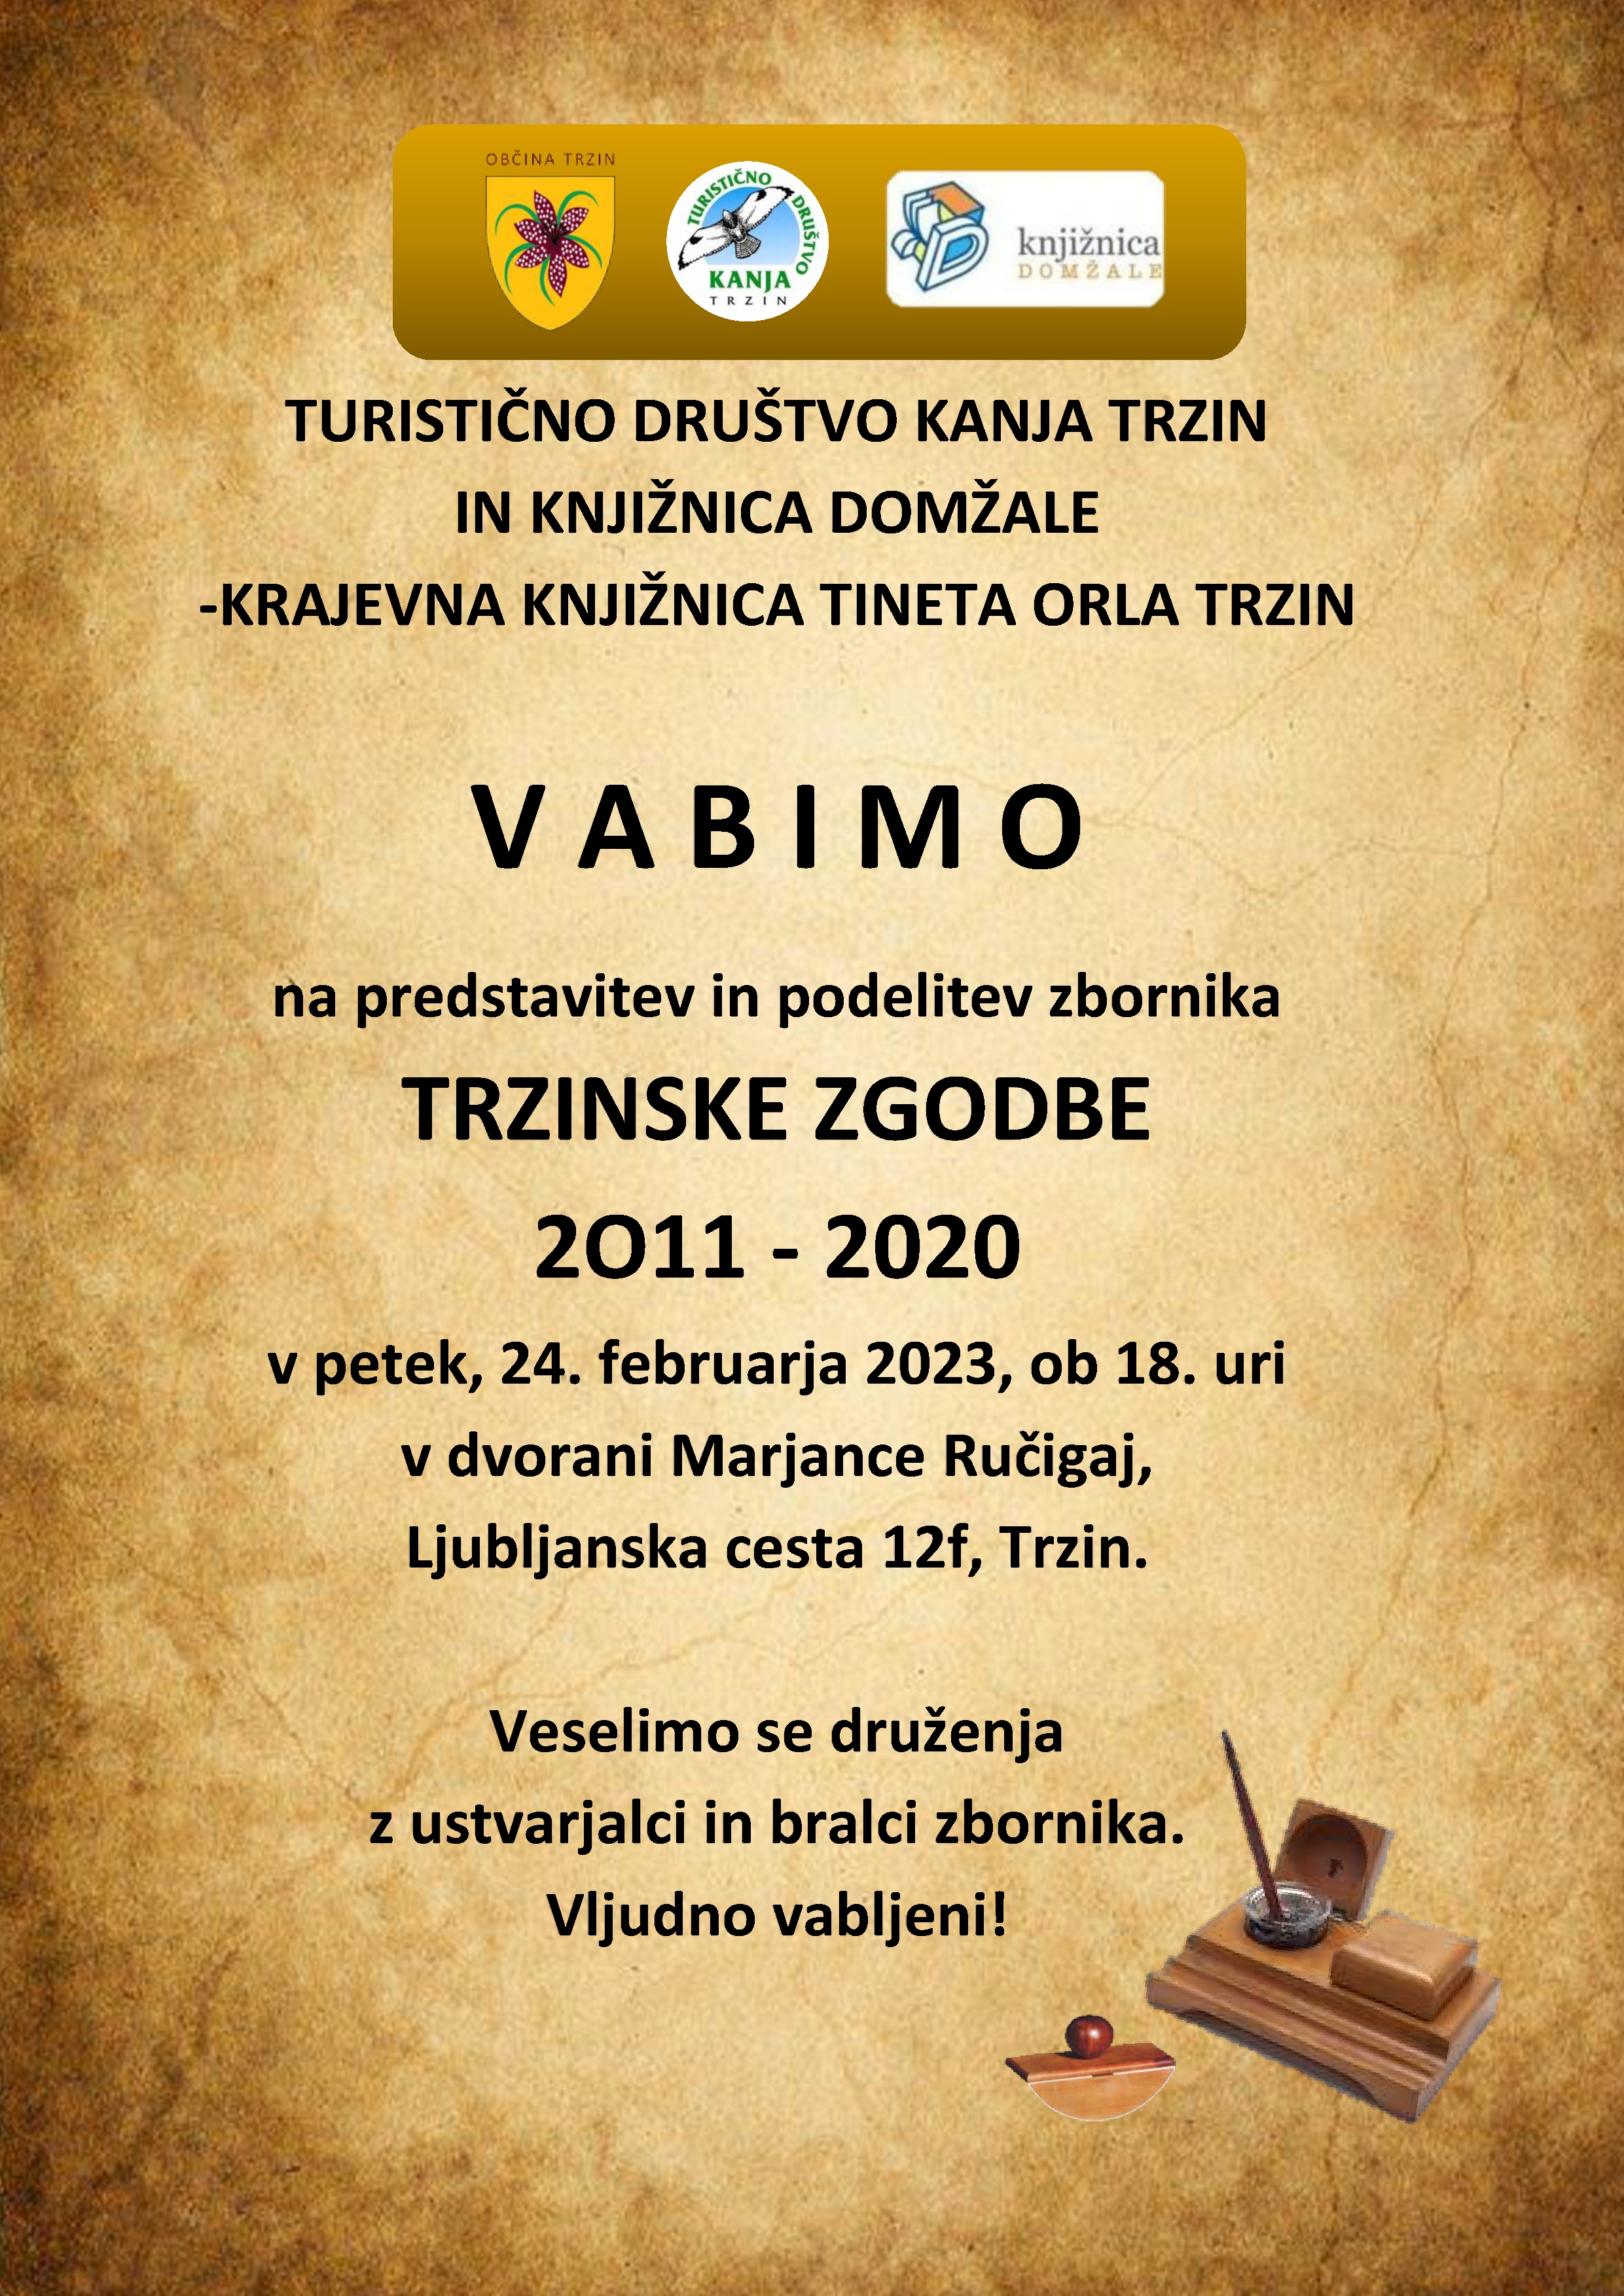 Vabilo-zbornik Trzinske zgodbe 2011-2020